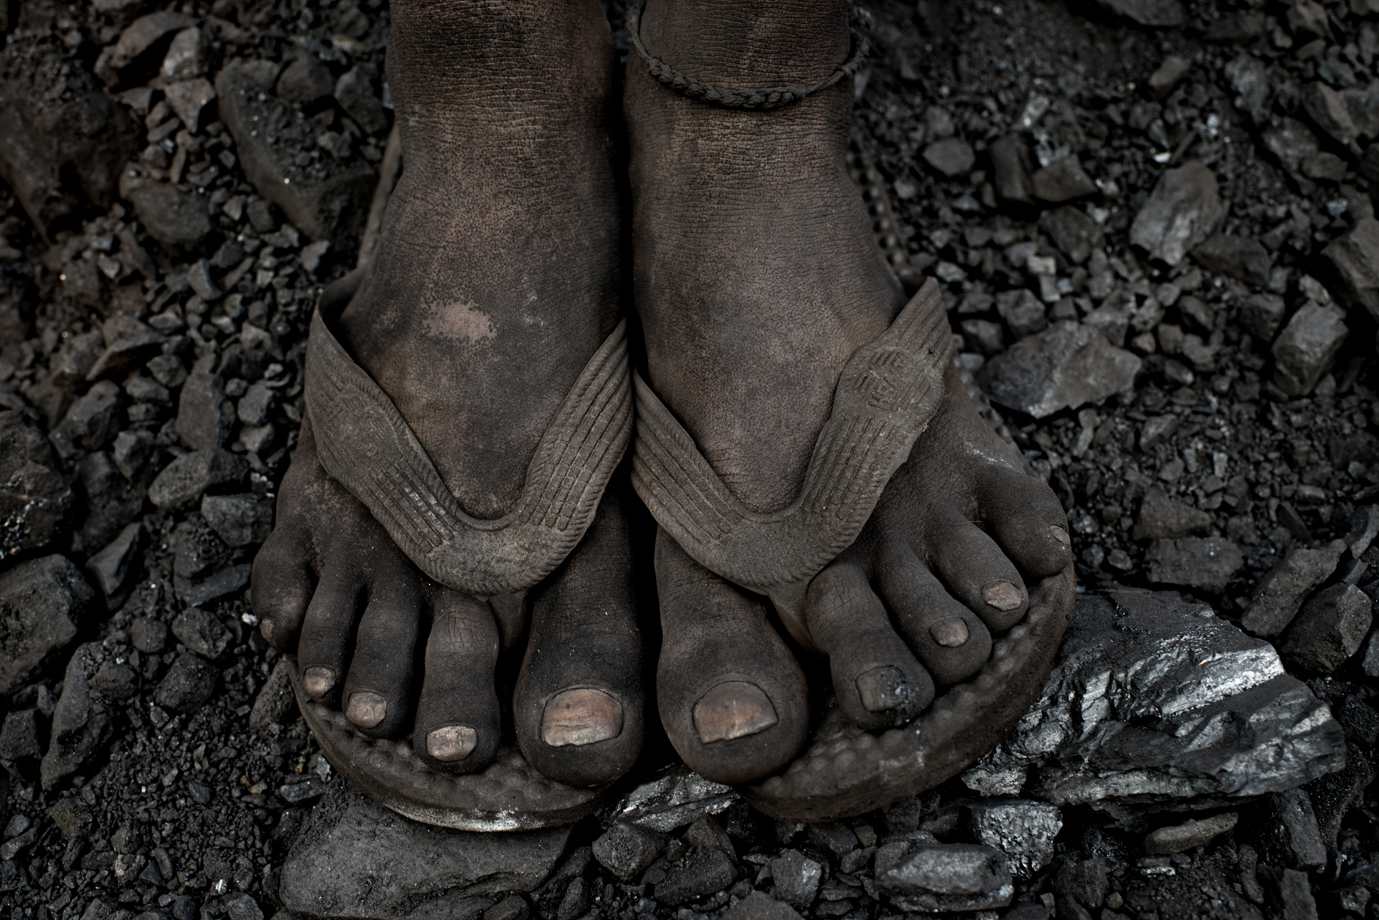  Coal miner, Jharkhand / India -2014 